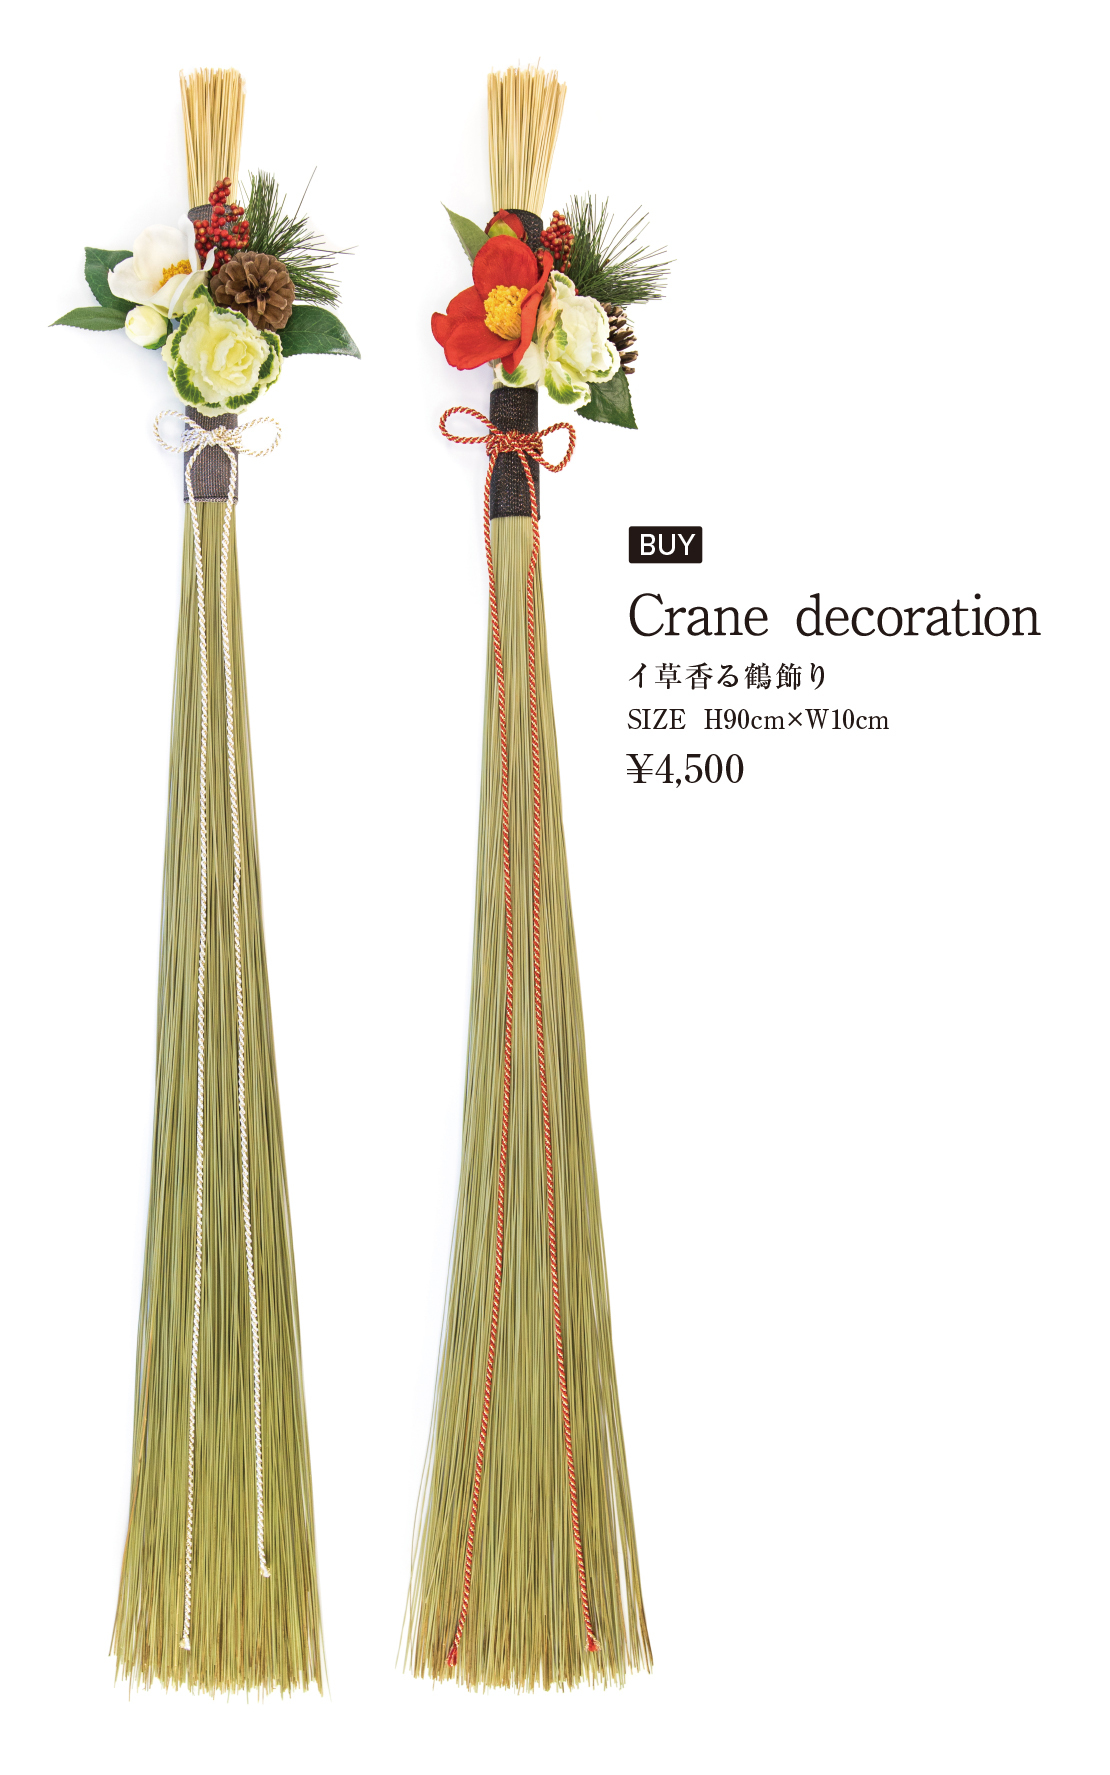 crane decoration photo